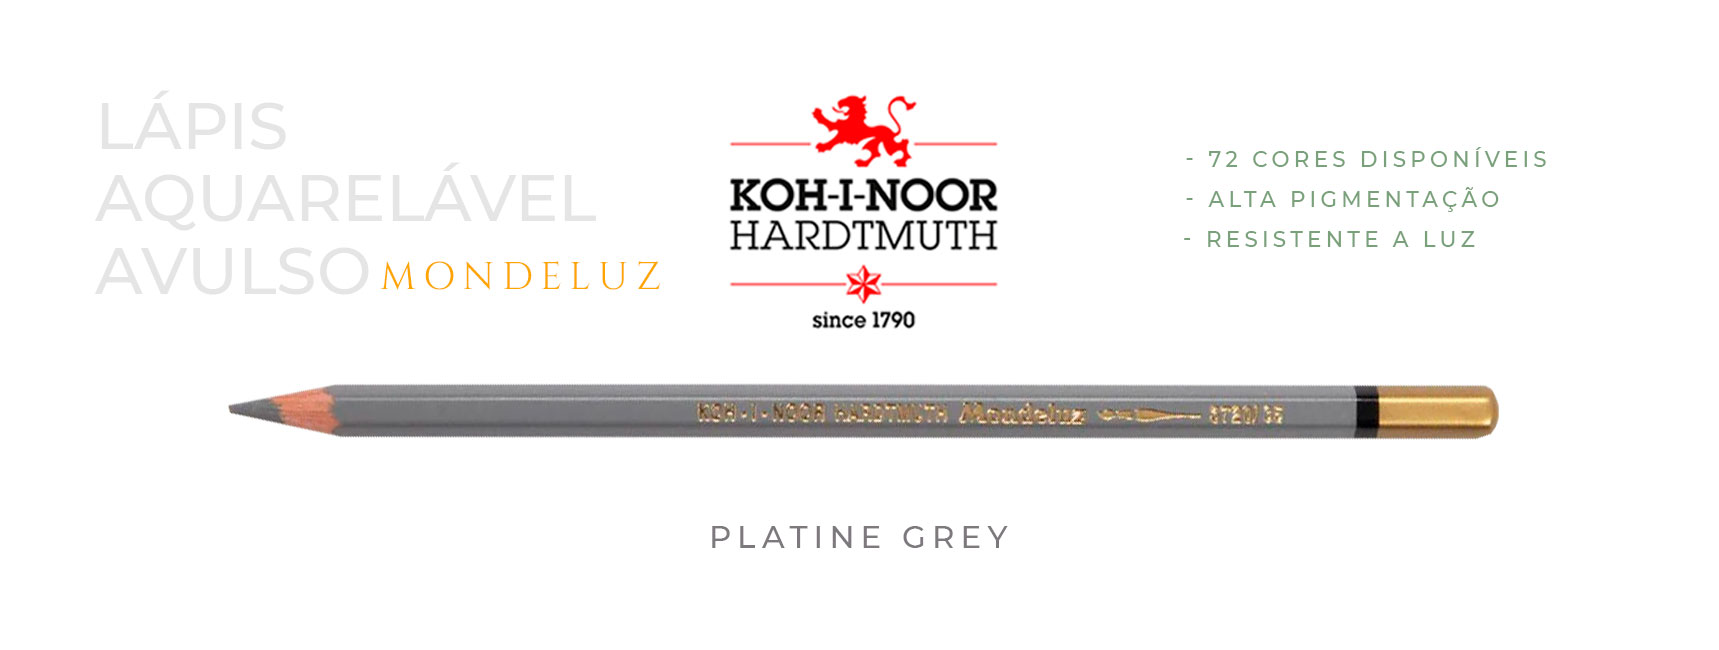 Lápis aquarelável avulso platine grey koh-i-noor